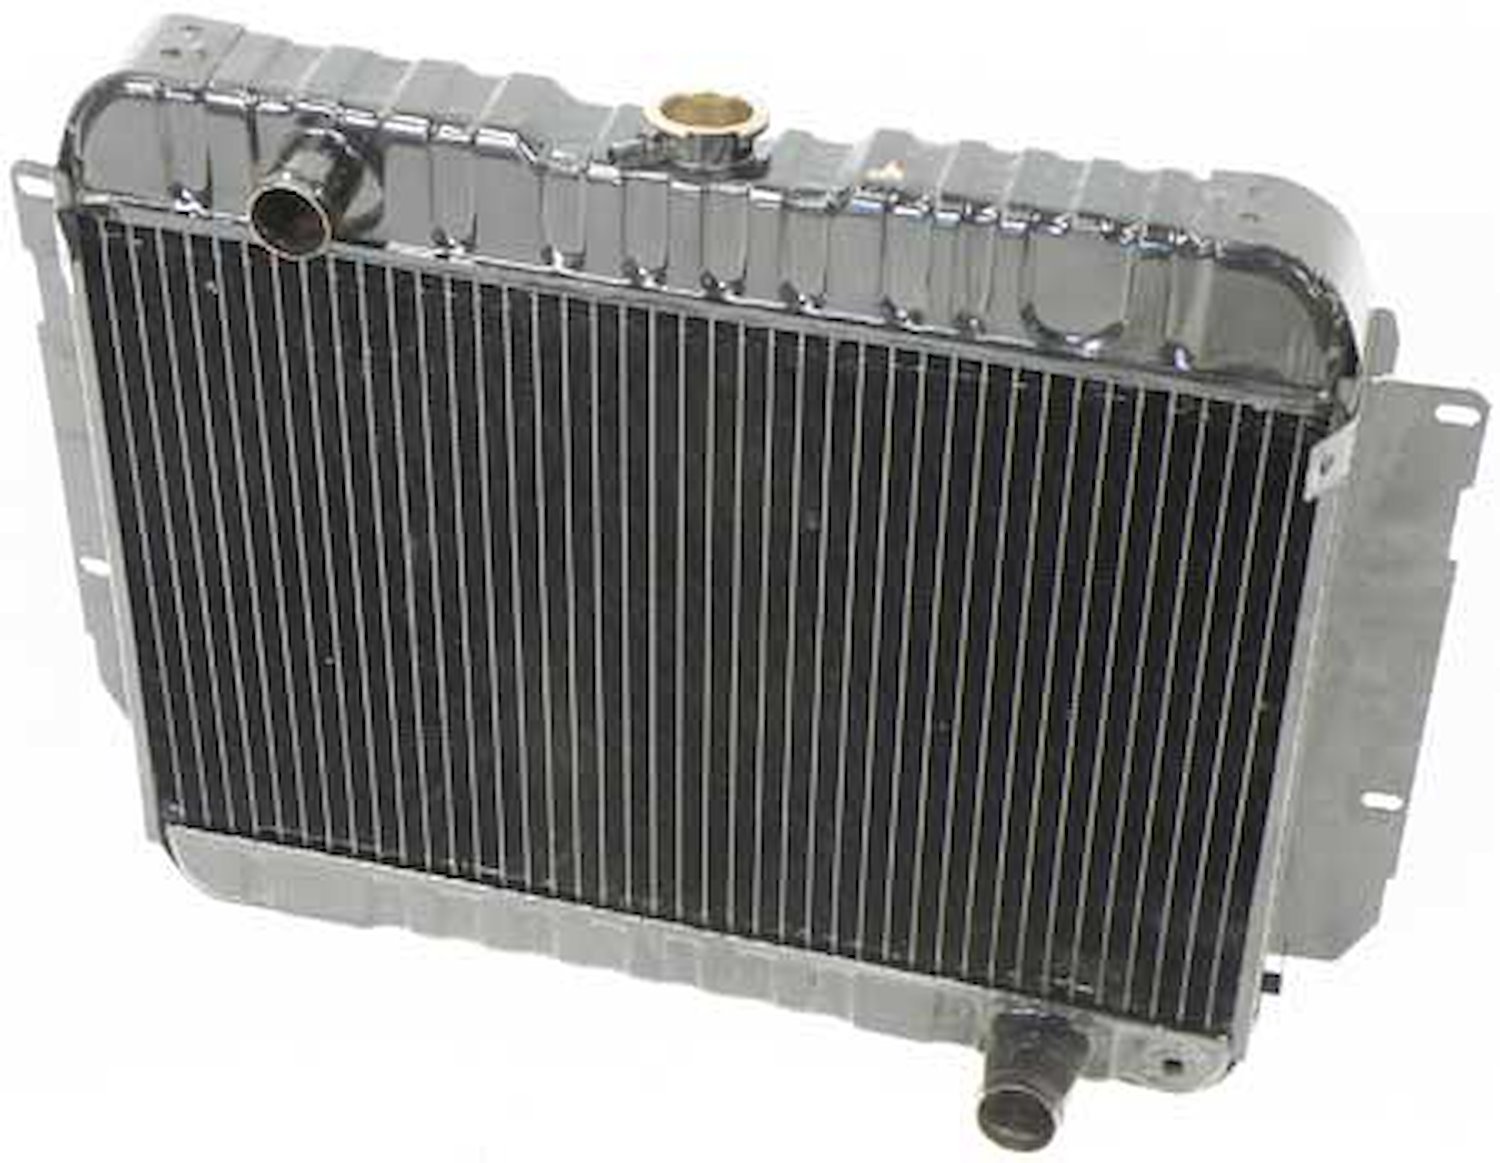 CRD1454S Radiator-1969-70 Full-Size V8 Small Block W/ MT & W/O AC-4 Row (15" X 23-1/2" X 2-5/8" Core)